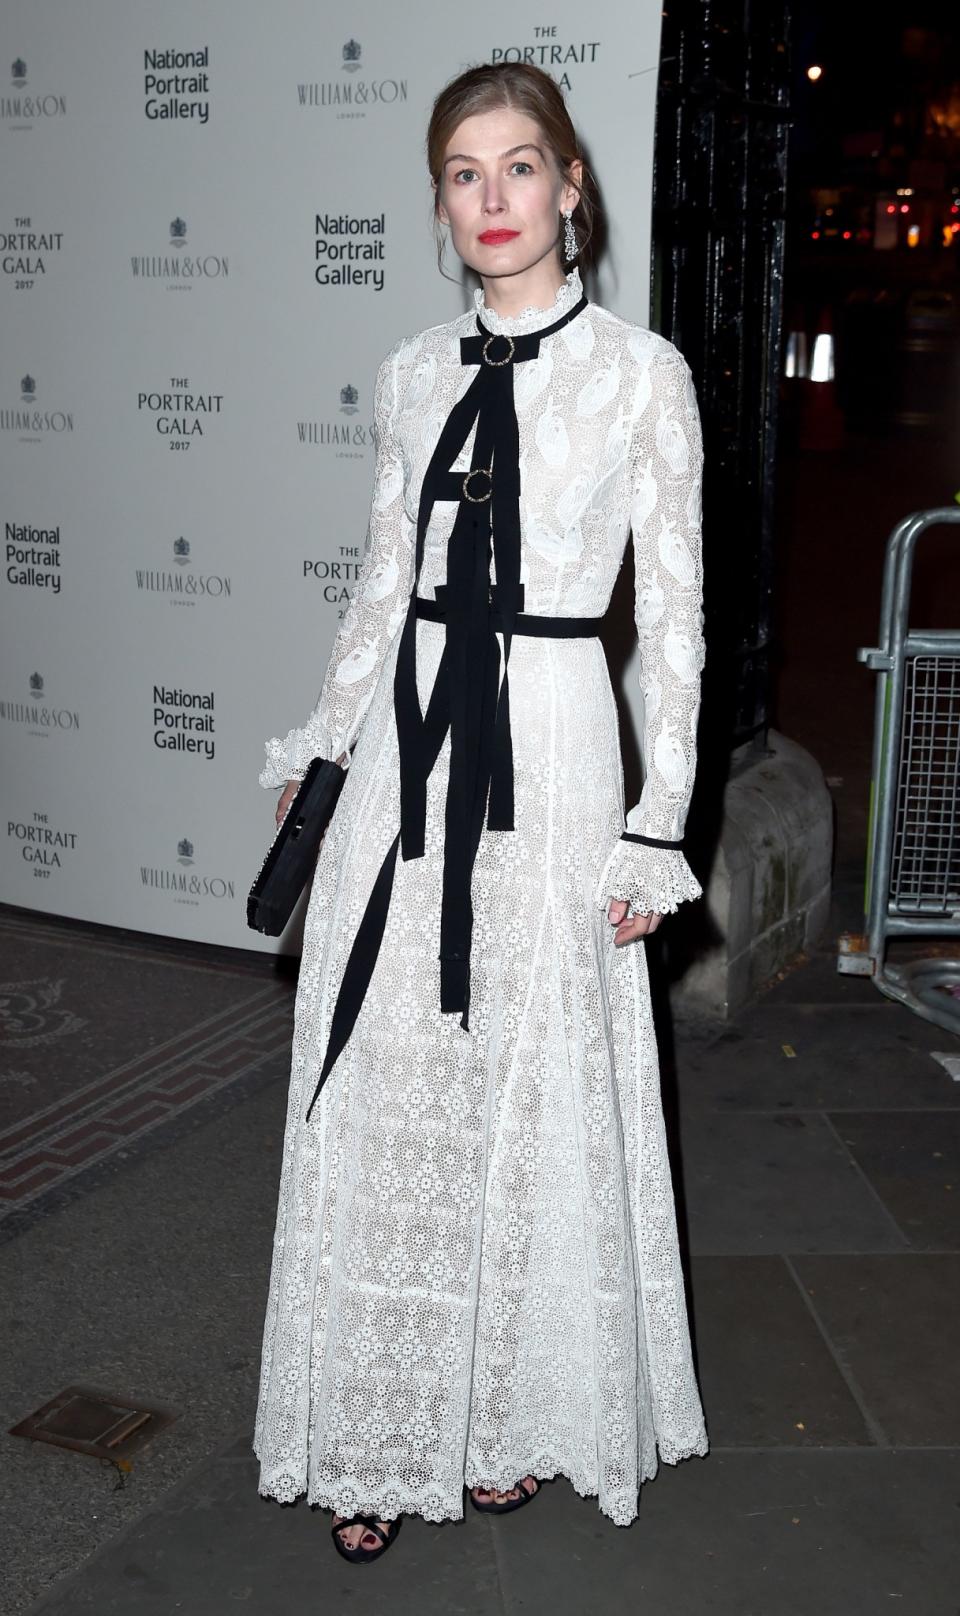 Rosamund Pike wore a Victoriana-style white dress.